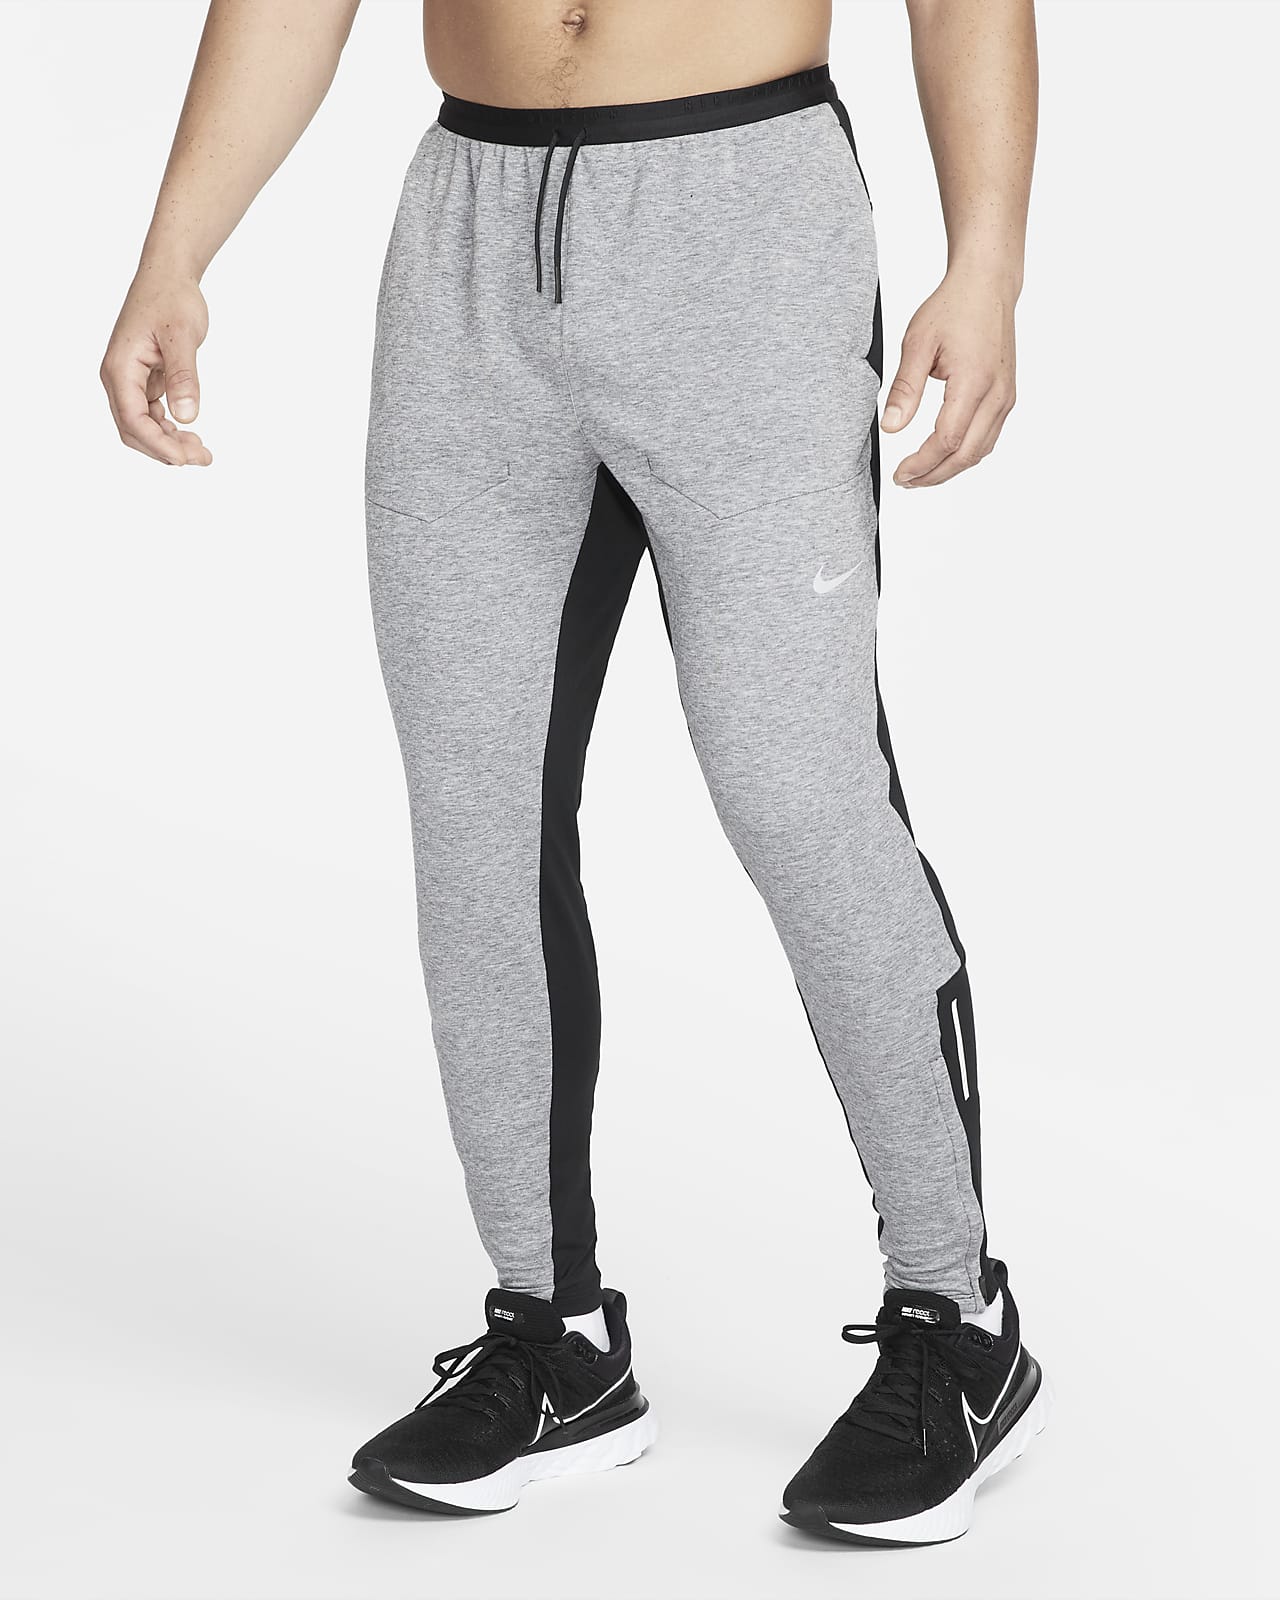 Nike Dri-FIT Running Division Phenom Slim-Fit Running Pants 'Black